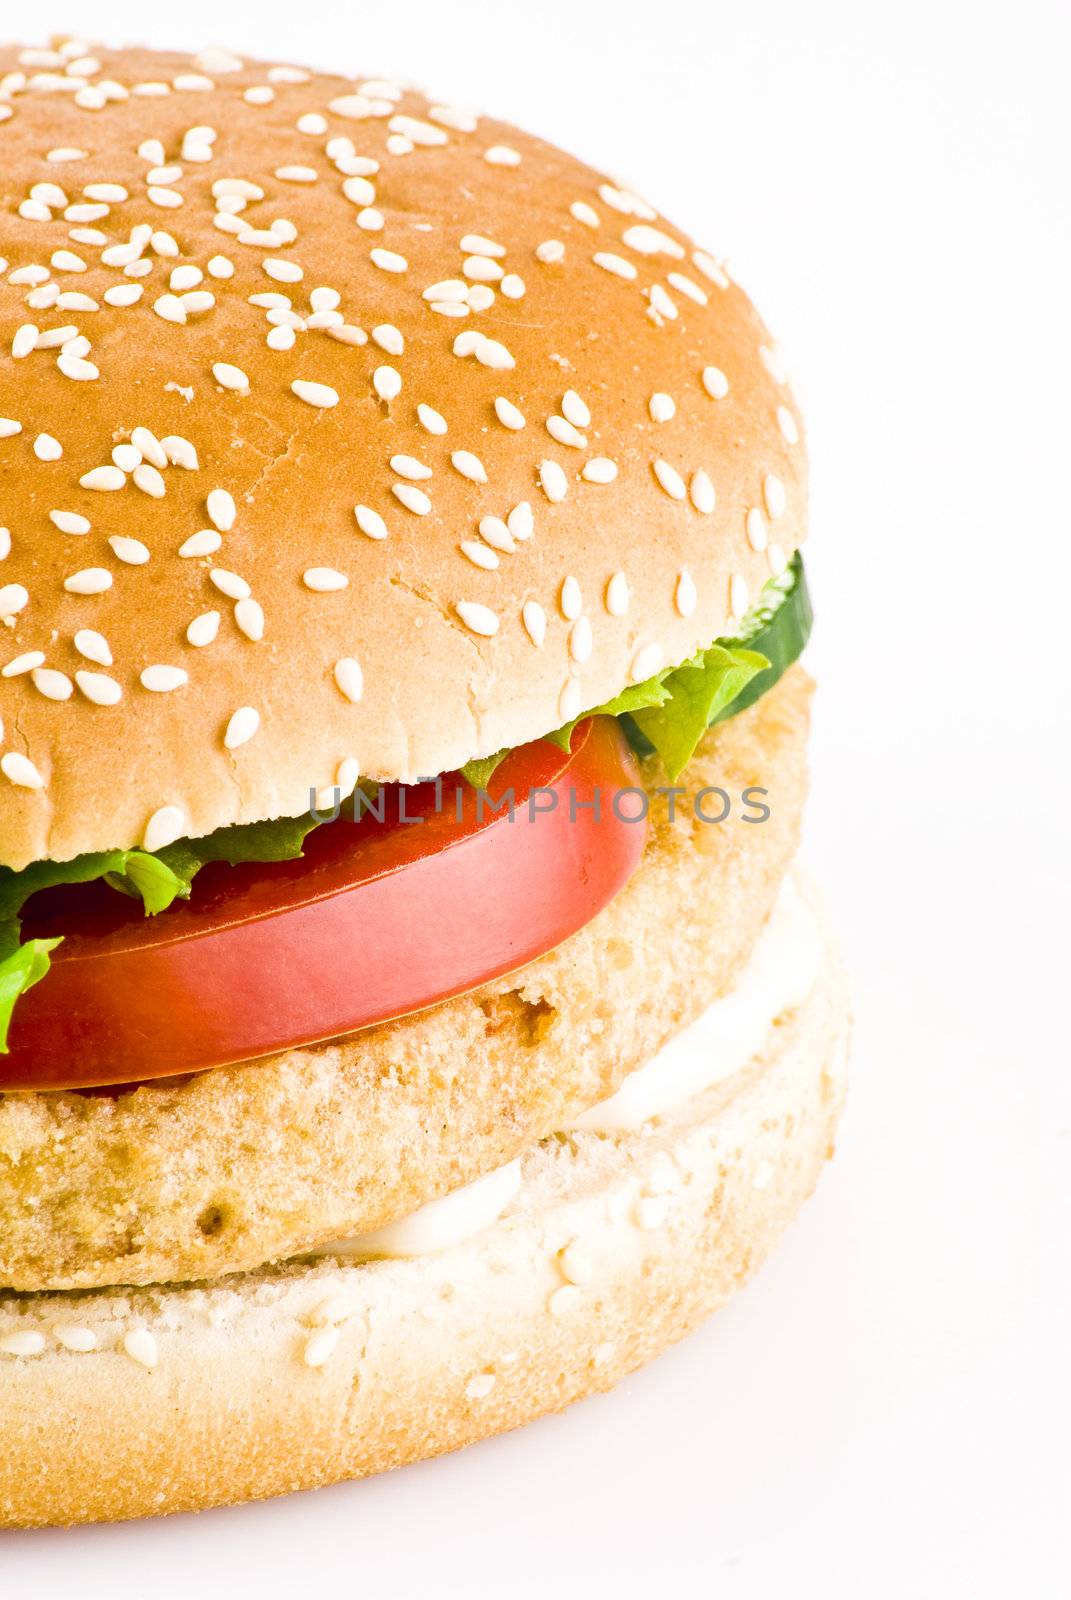 Chicken burger by caldix